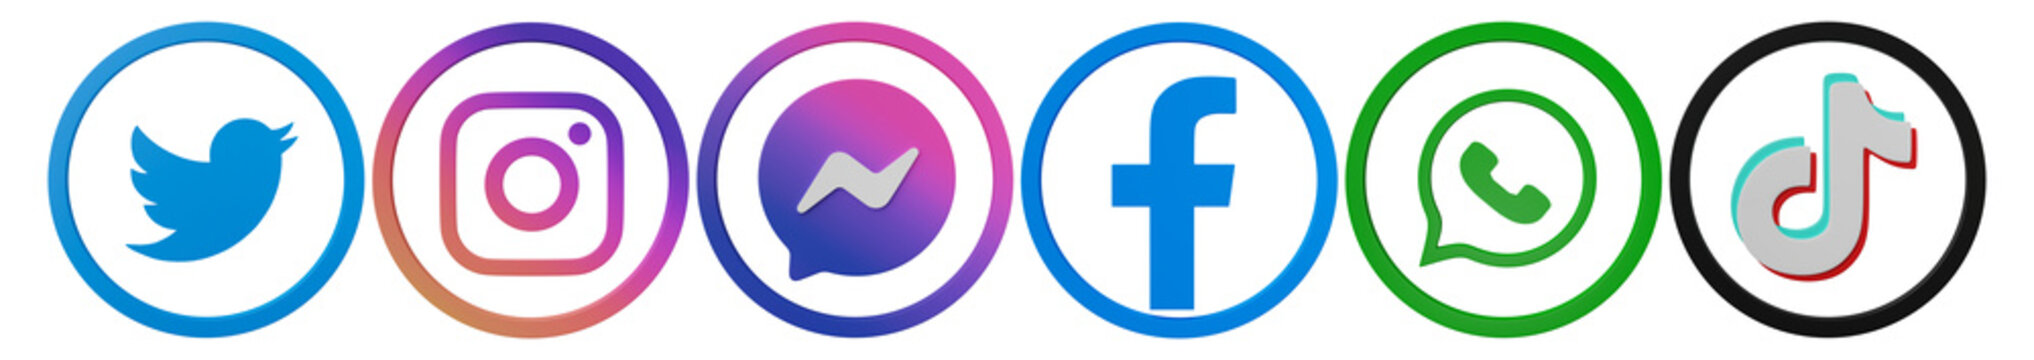 Social media icons on transparent background. Instagram, Facebook, Messenger, Twitter, TikTok, Whatsapp logo set. 3D editorial illustration.